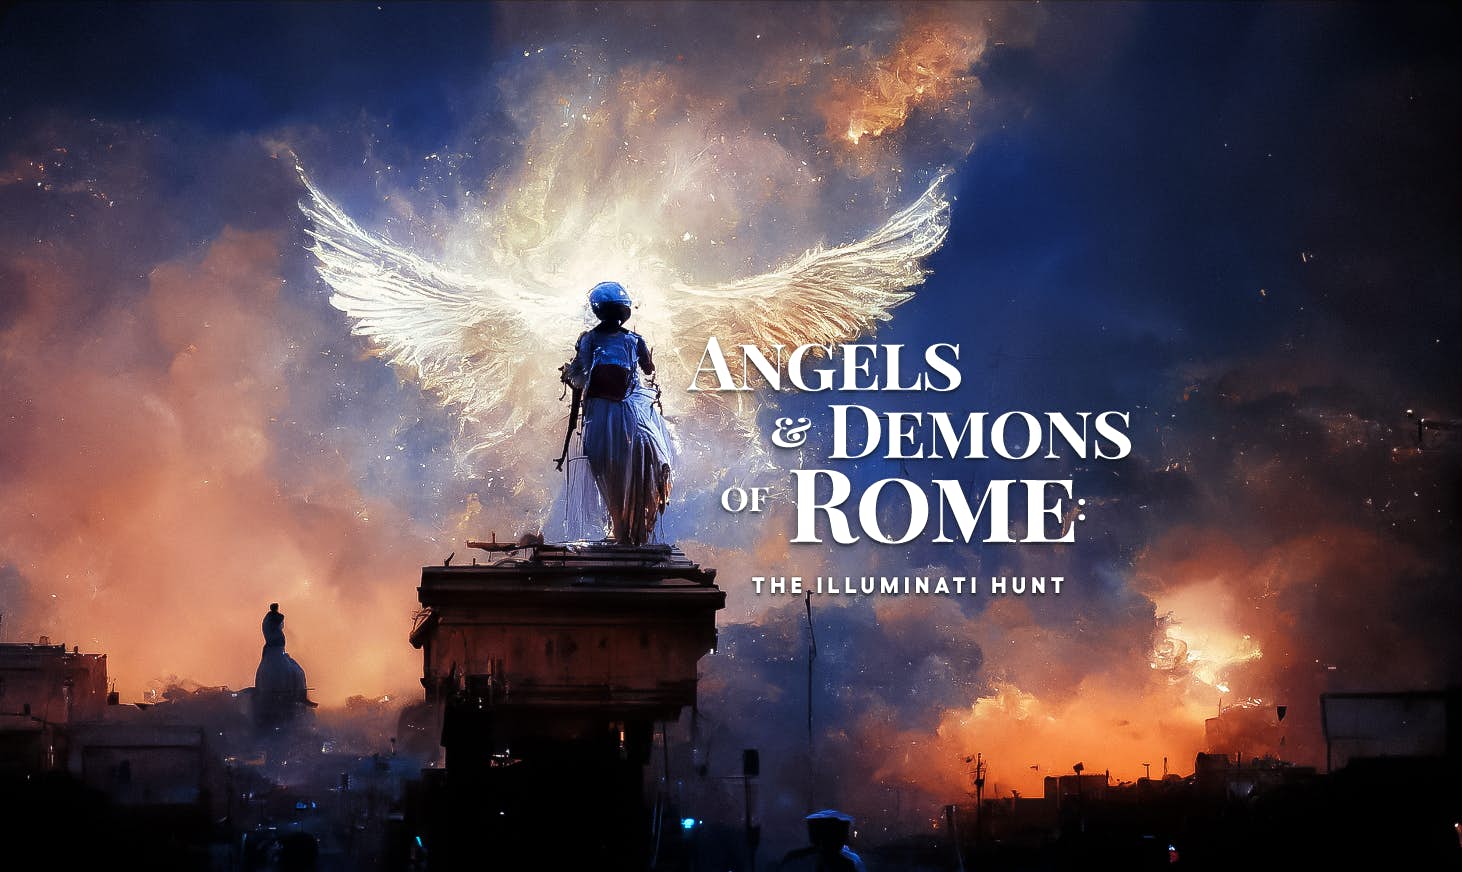 Angels & Demons of Rome: The Illuminati Hunt (audio stories) image